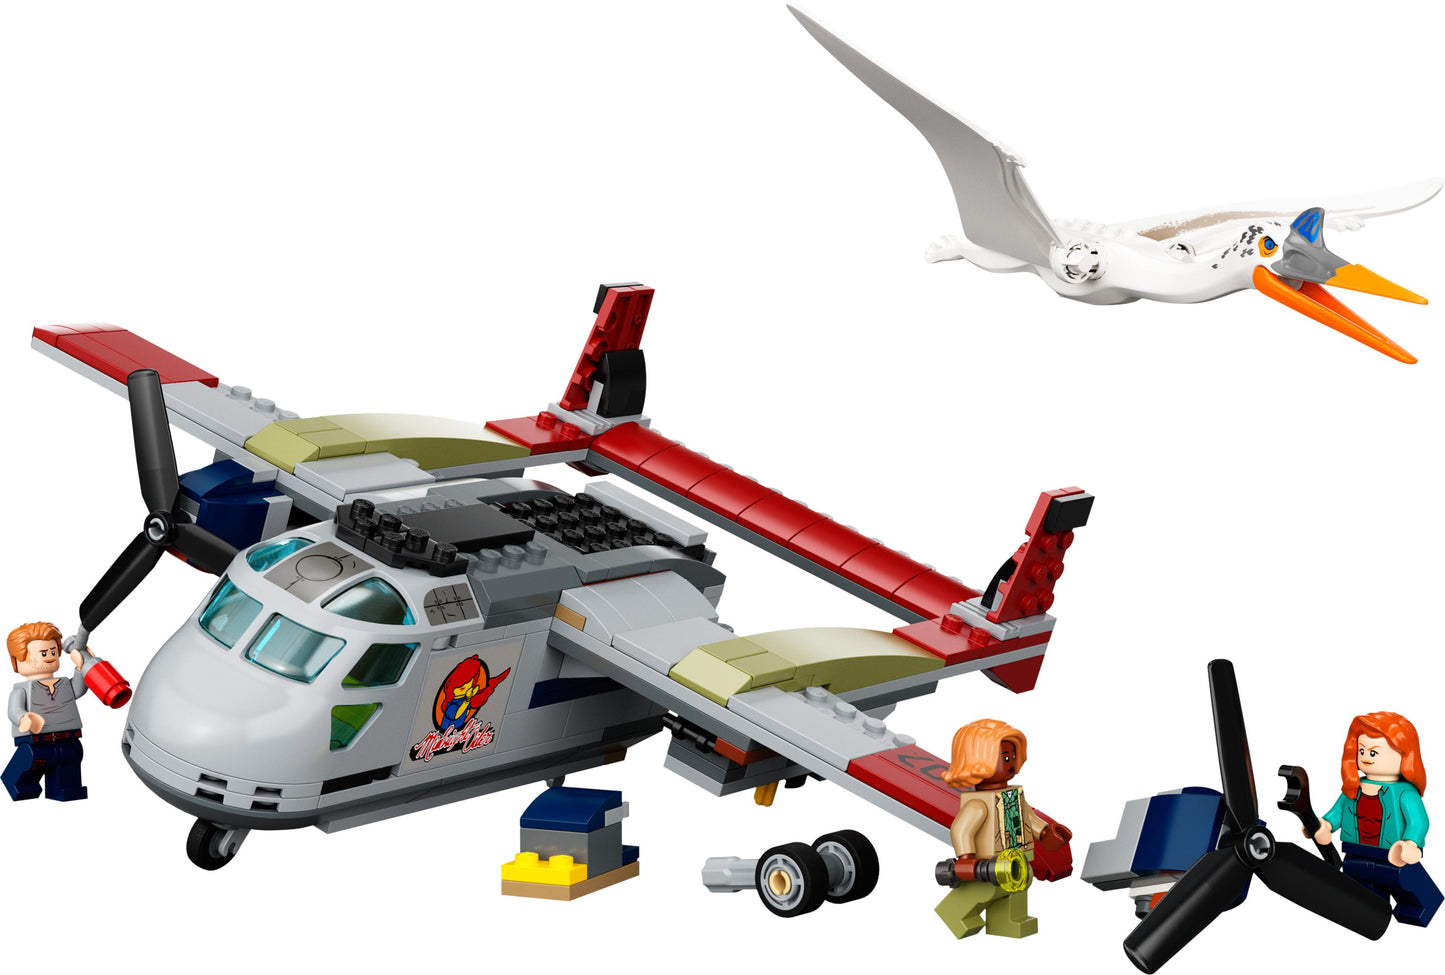 76947 LEGO Jurassic World - Quetzalcoatlus: agguato aereo